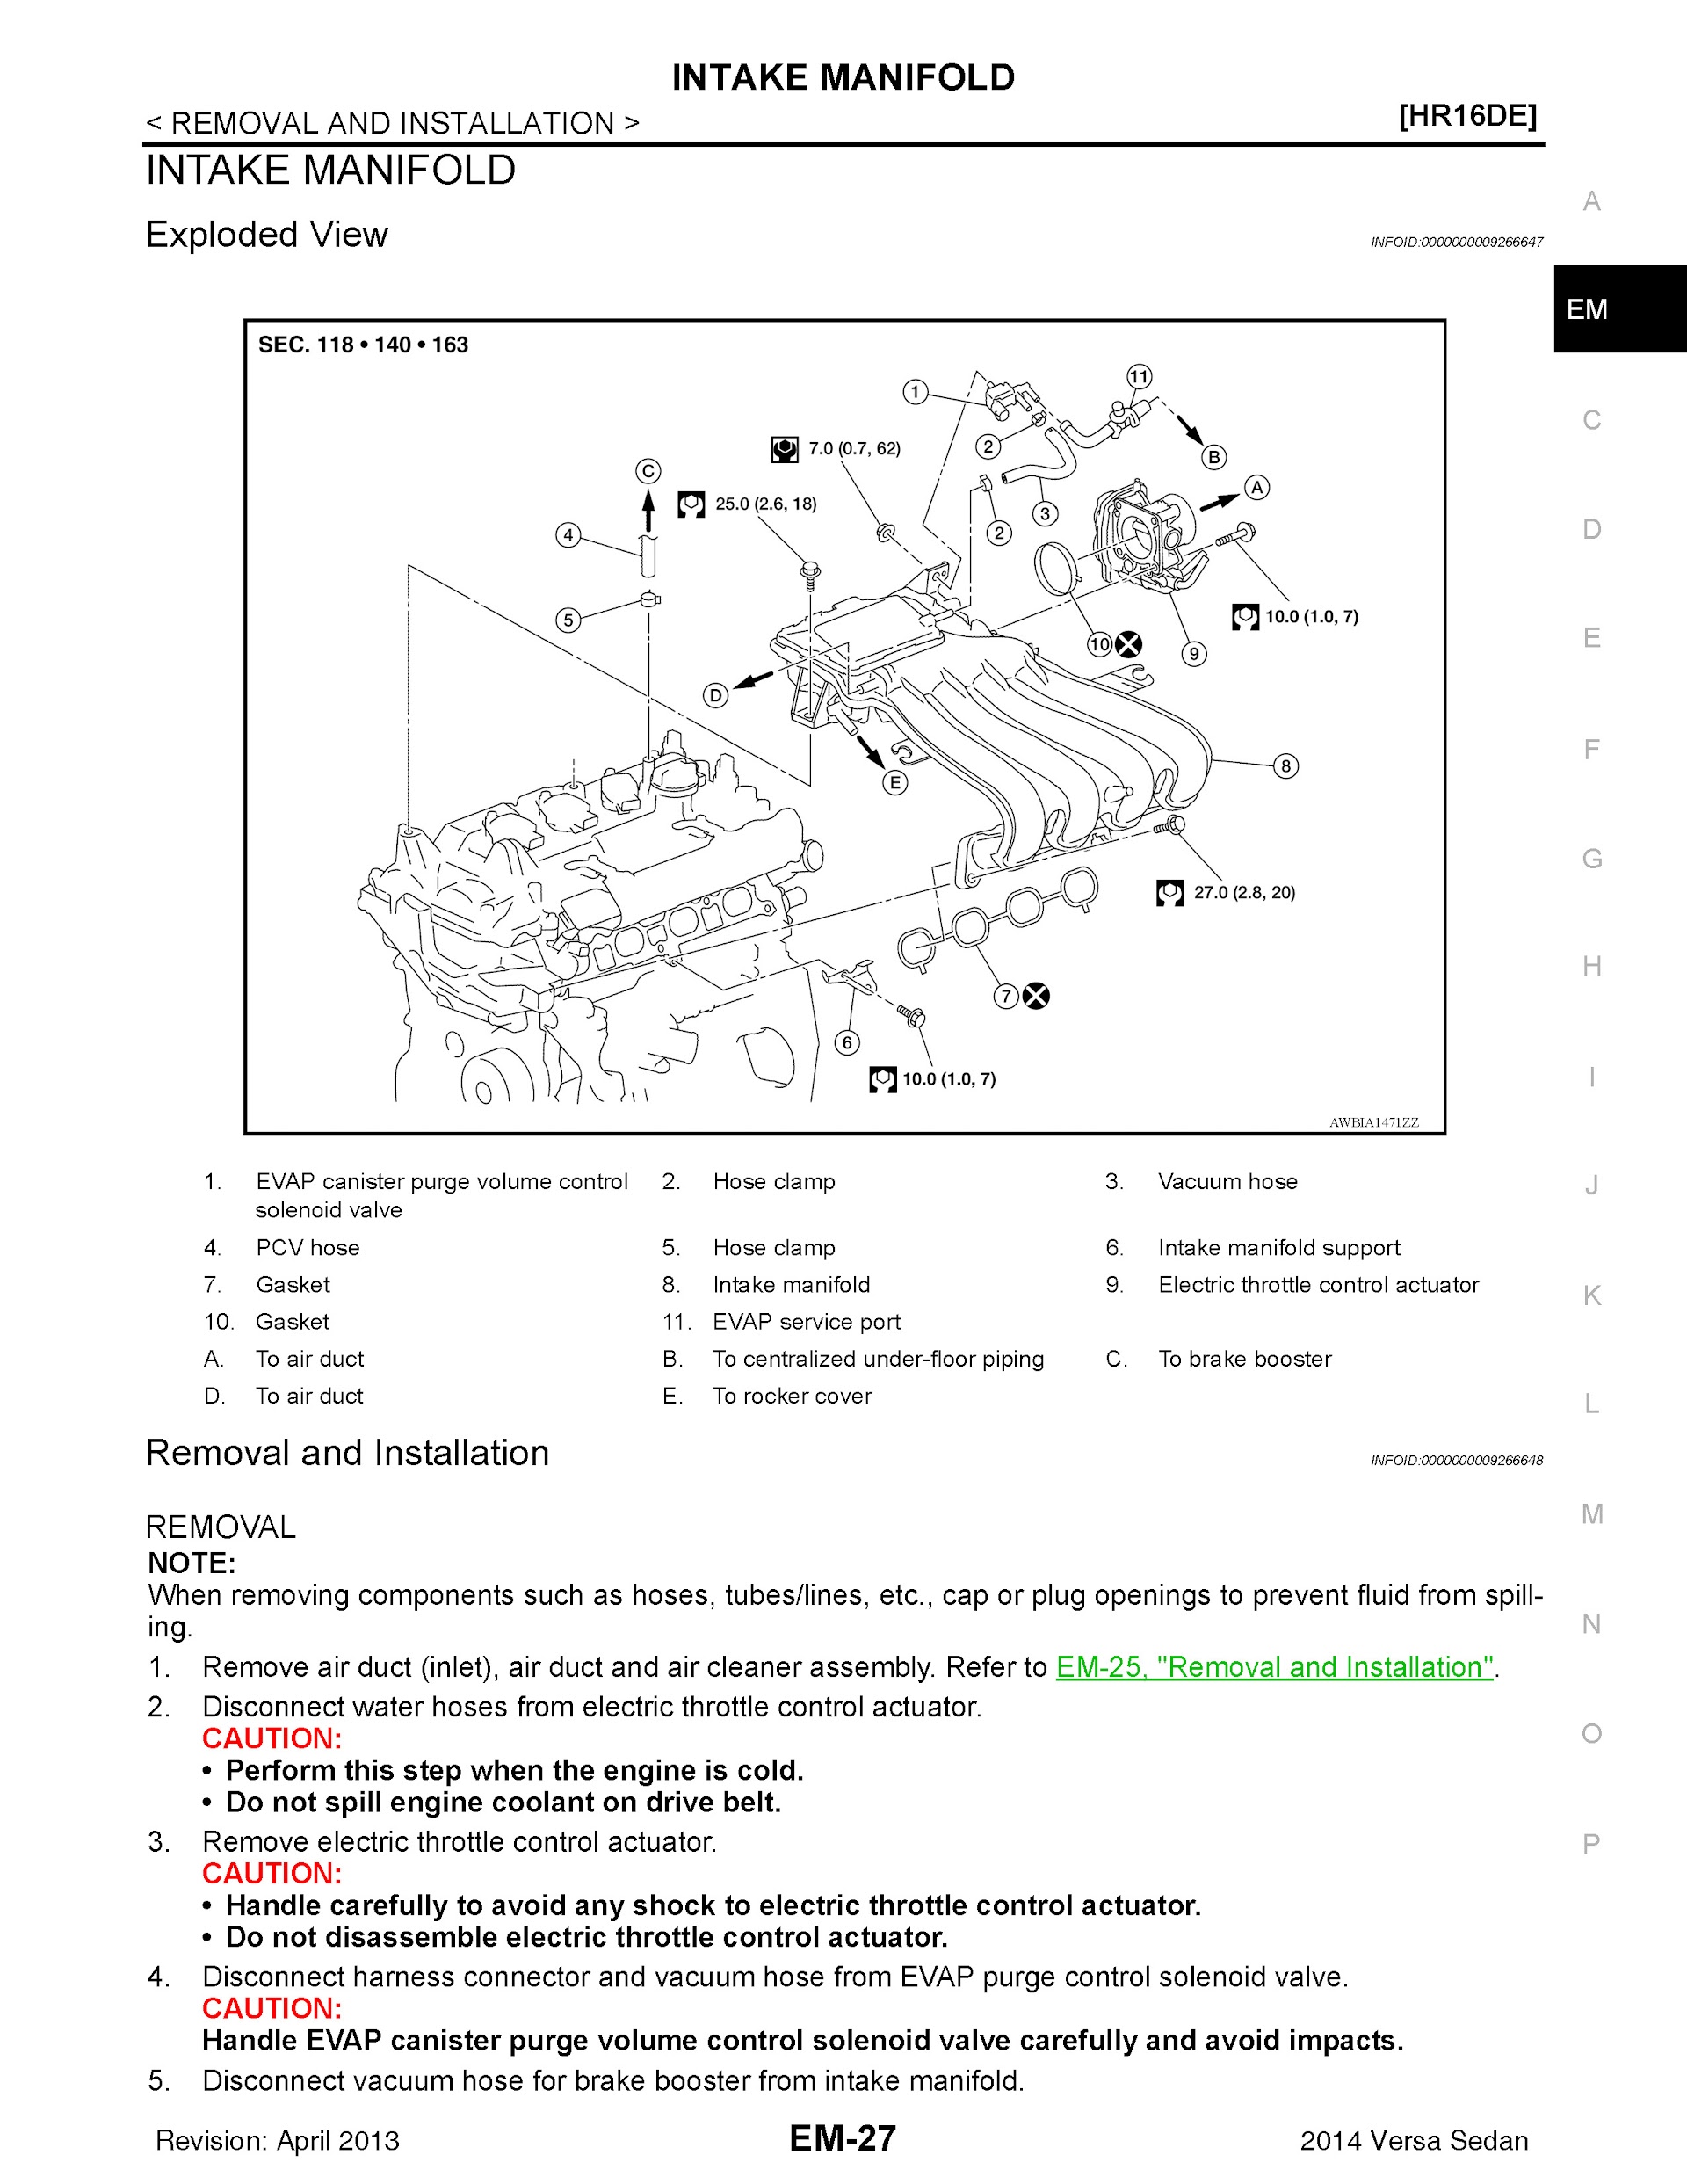 2014 Nissan Versa Sedan Repair Manual, Intake Manifold Removal and Installation